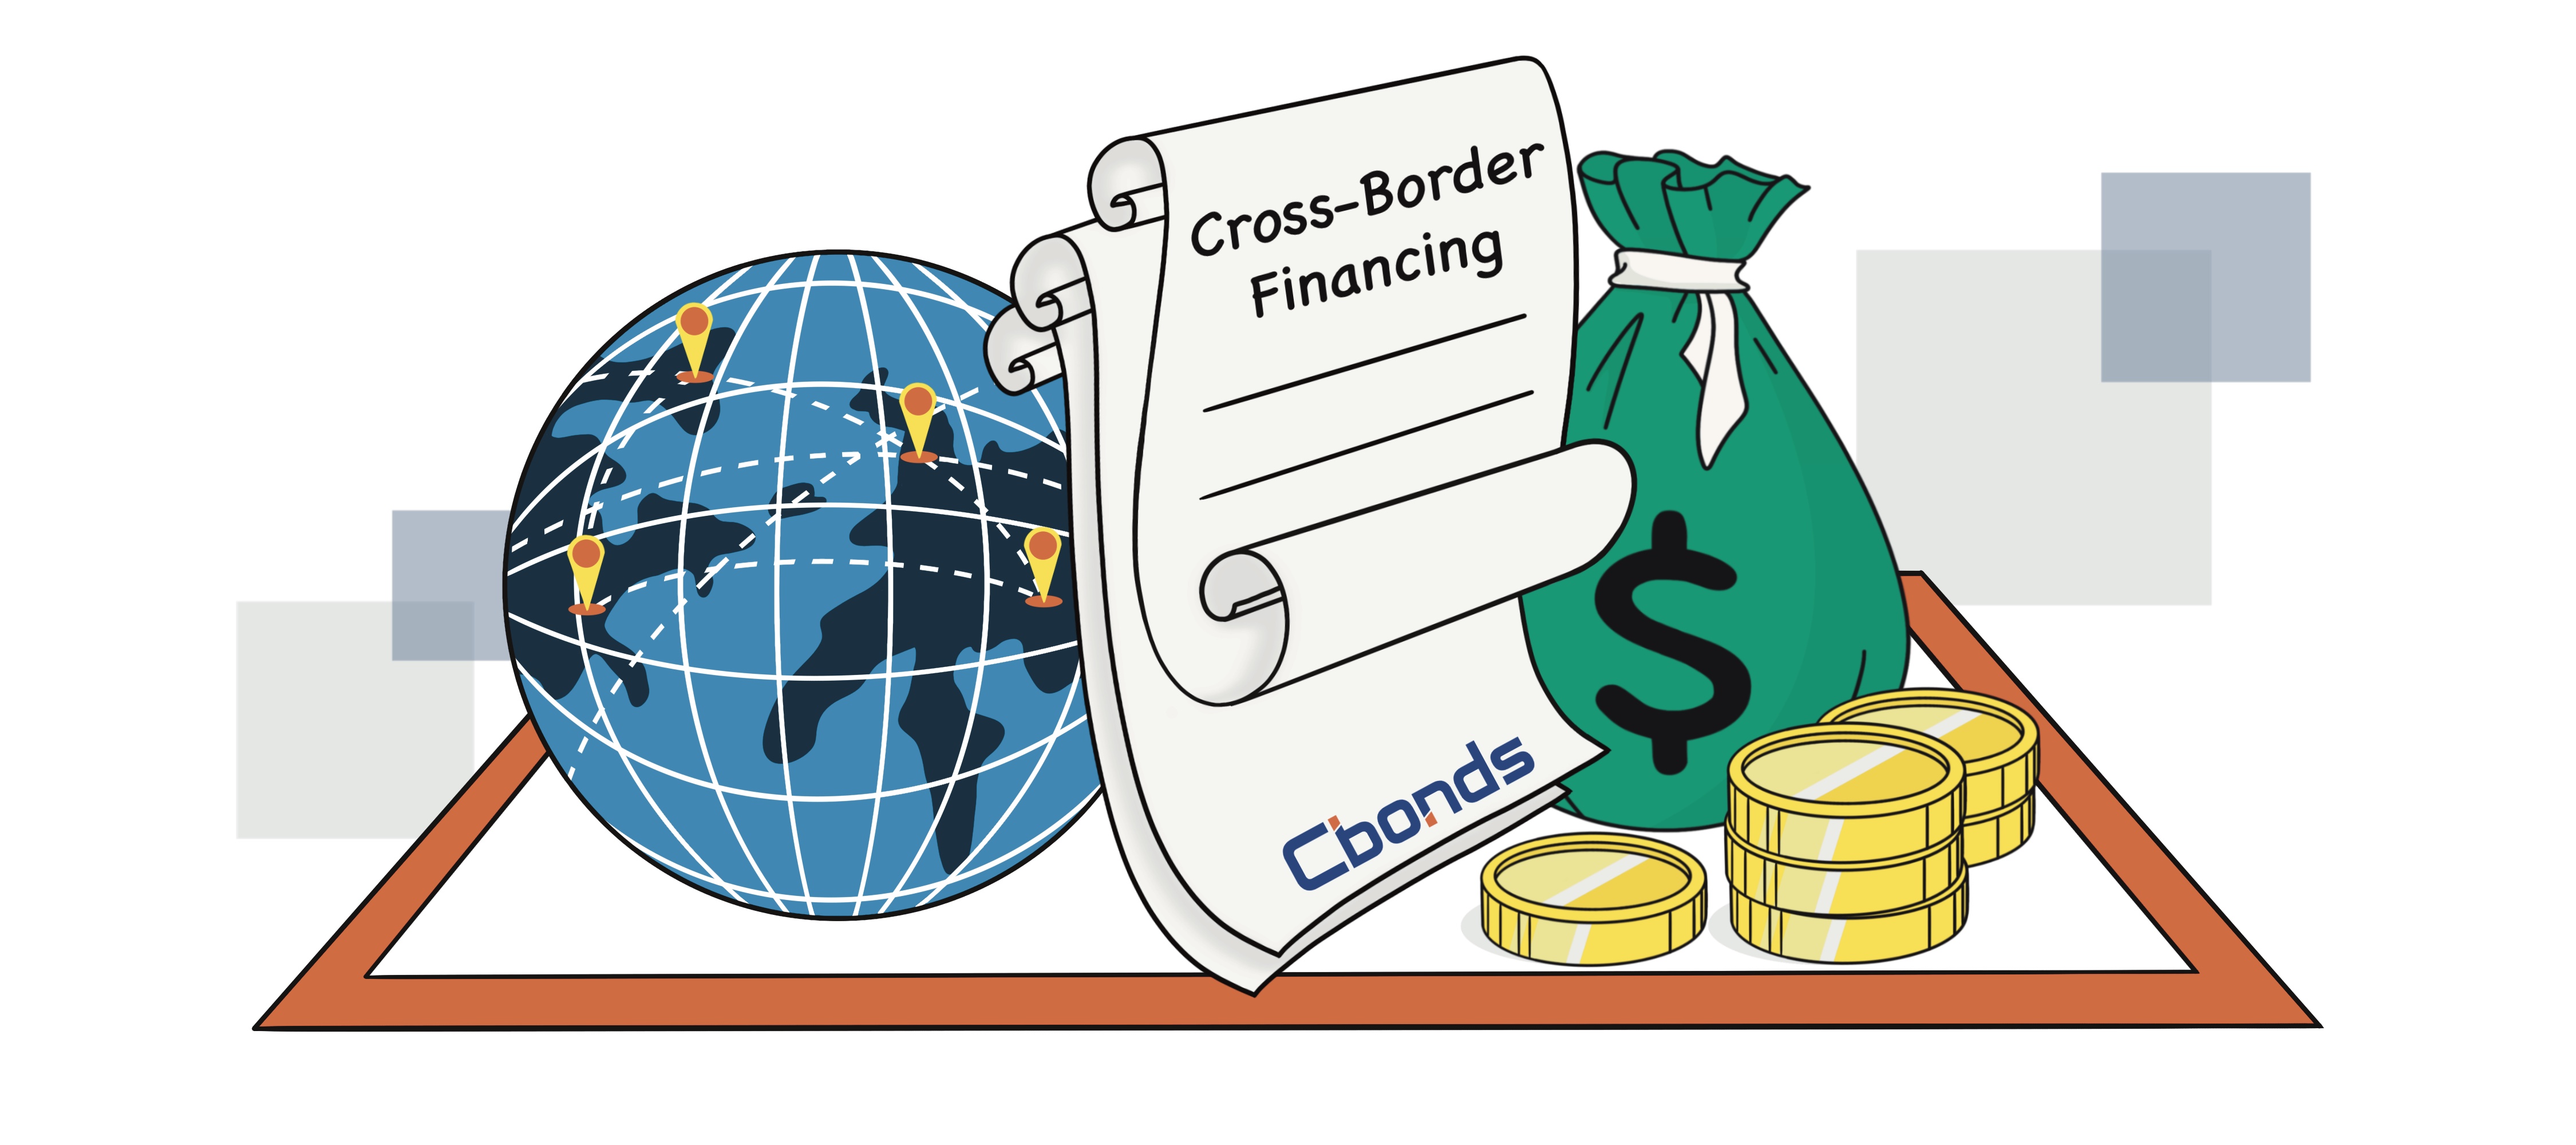 Cross-Border Financing